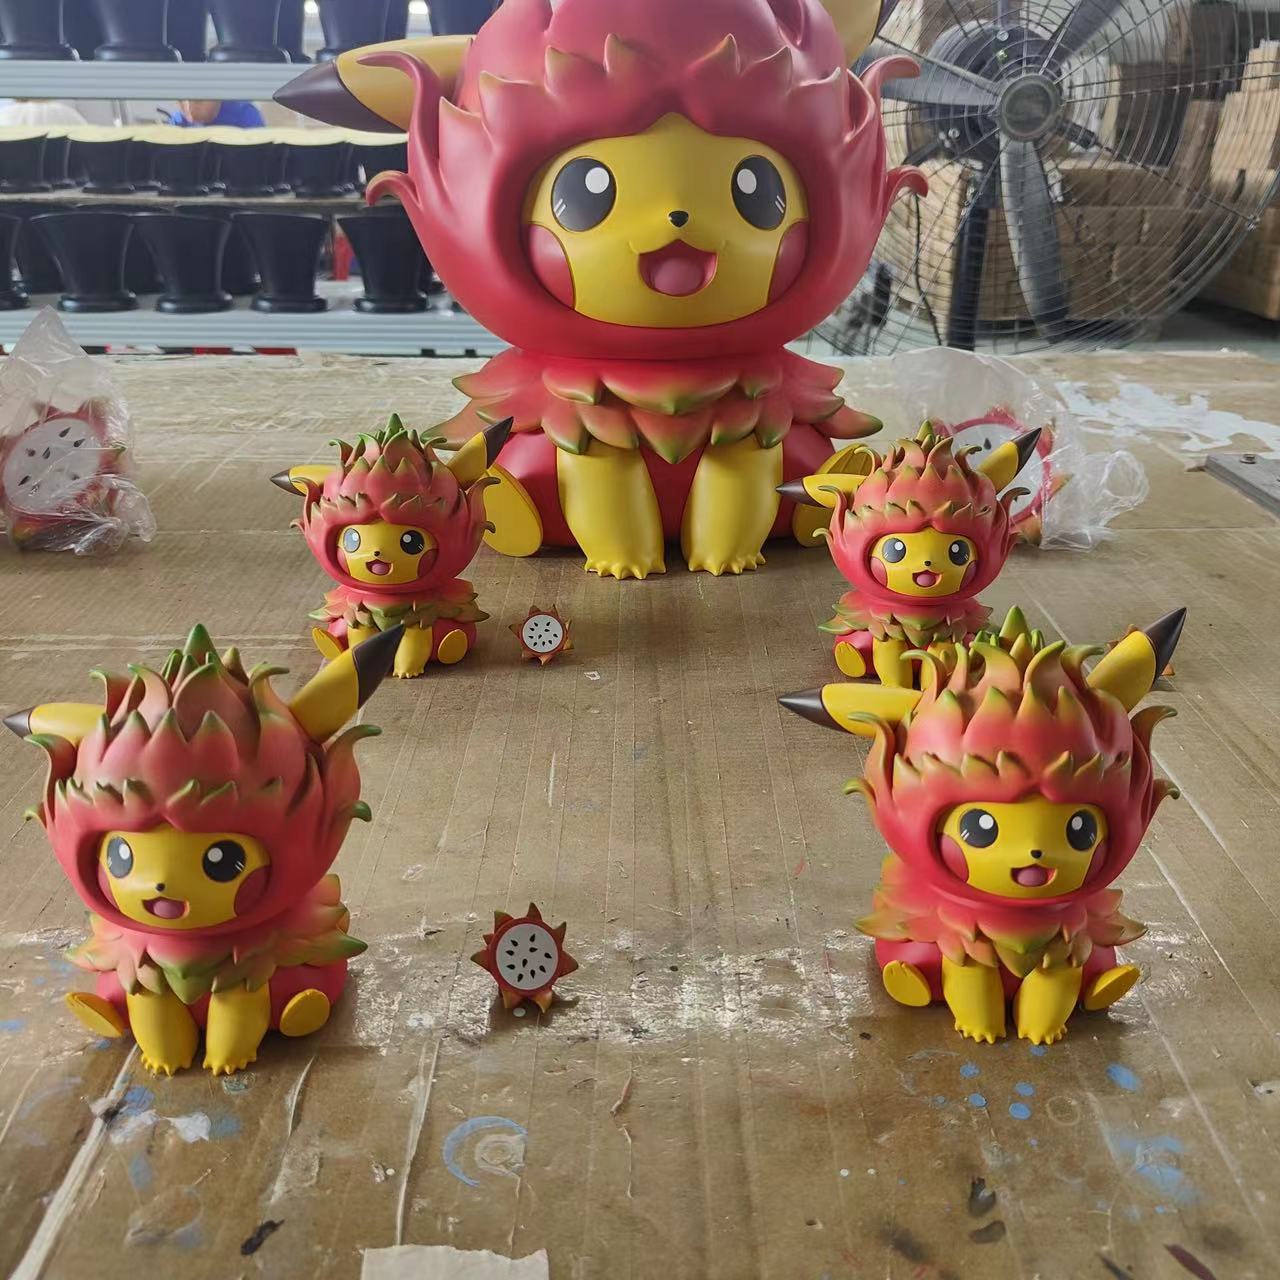 〖Sold Out〗Pokémon Peripheral Products Fruit Series Pitaya Pikachu - DM Studio